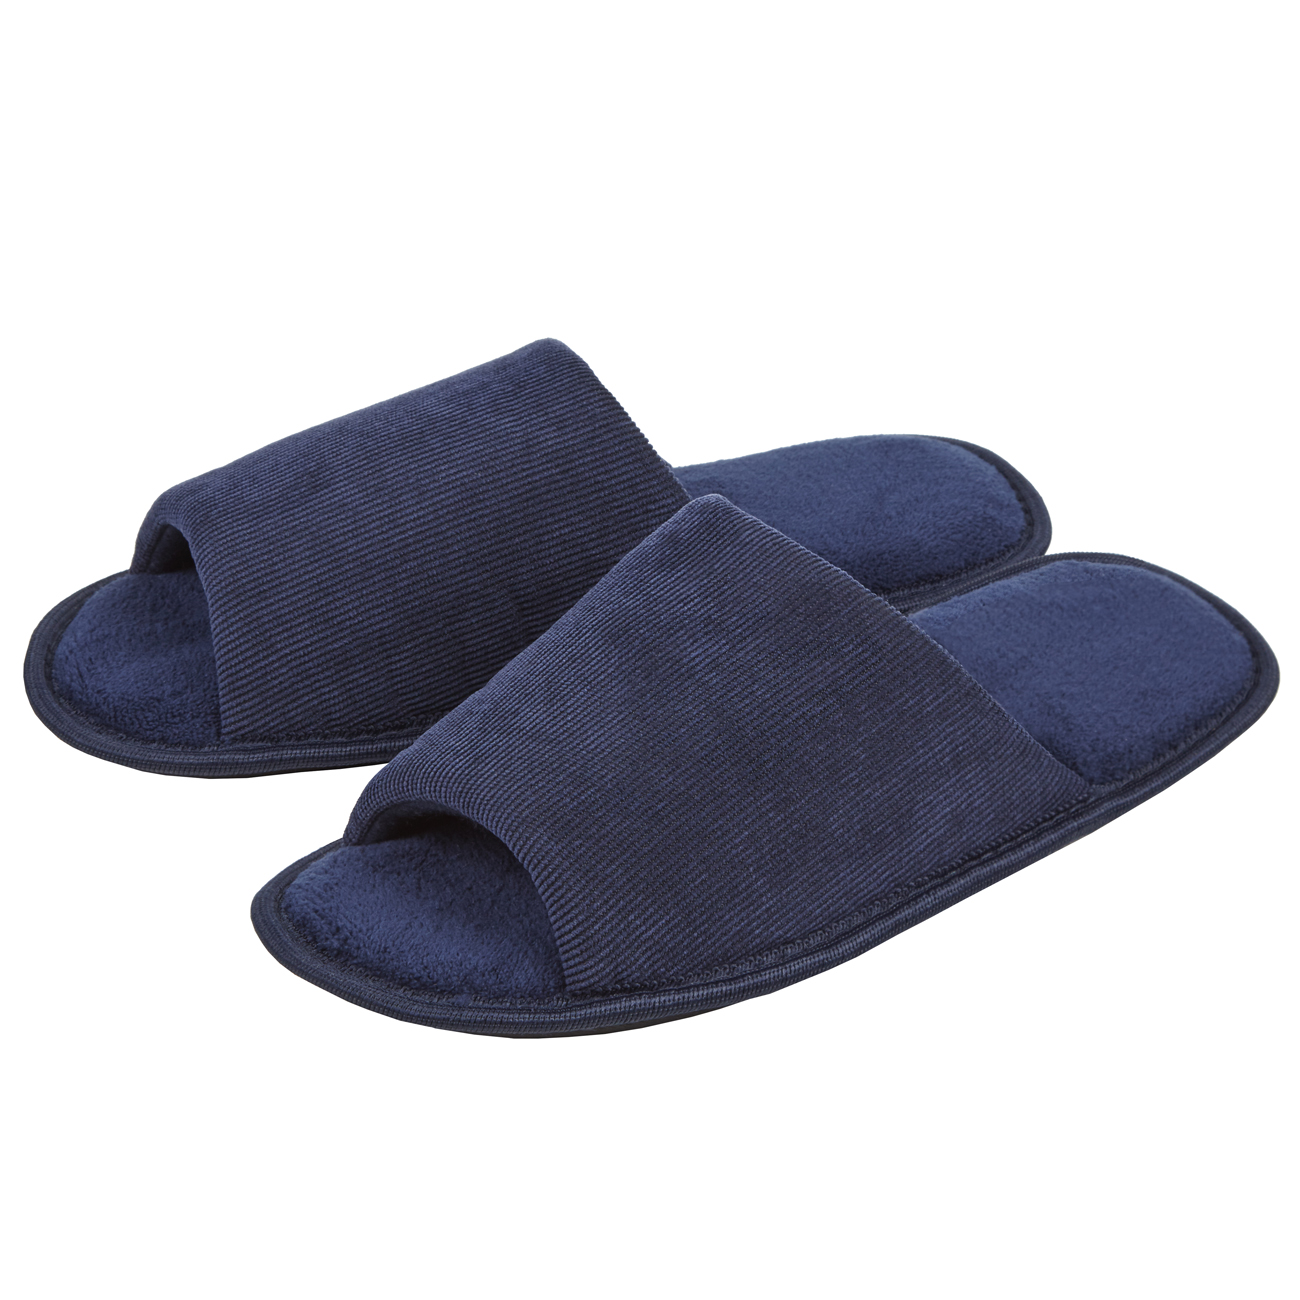 open toe men's slippers